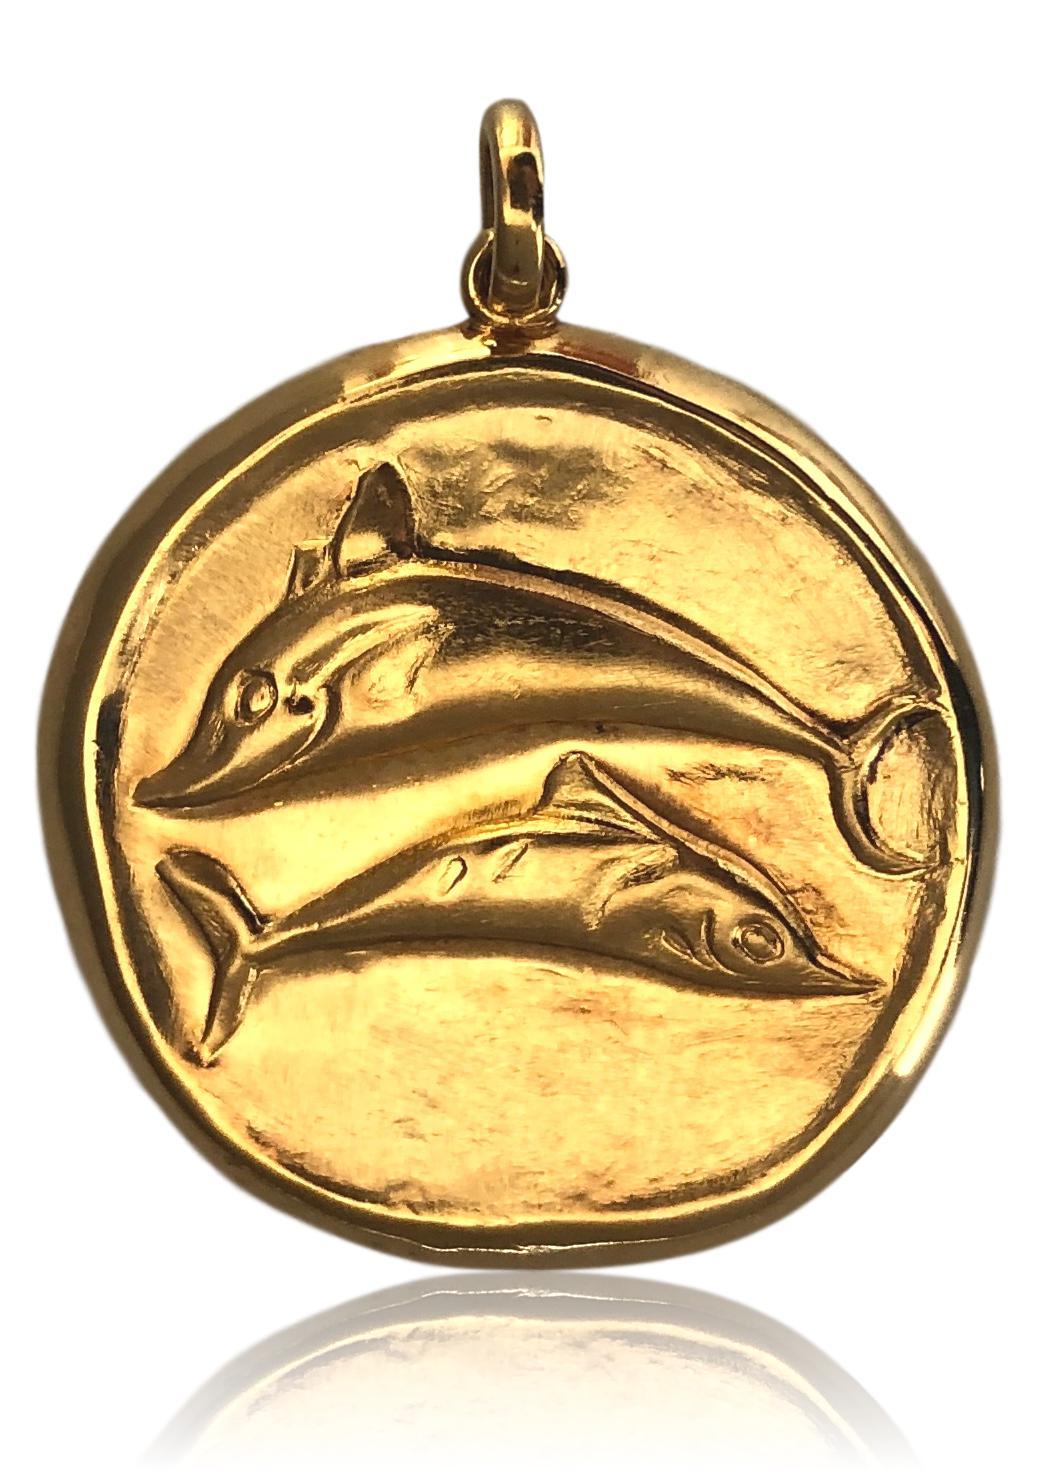 Gold Zodiac pendant by Greek designer Lalaounis. The  1 1/2